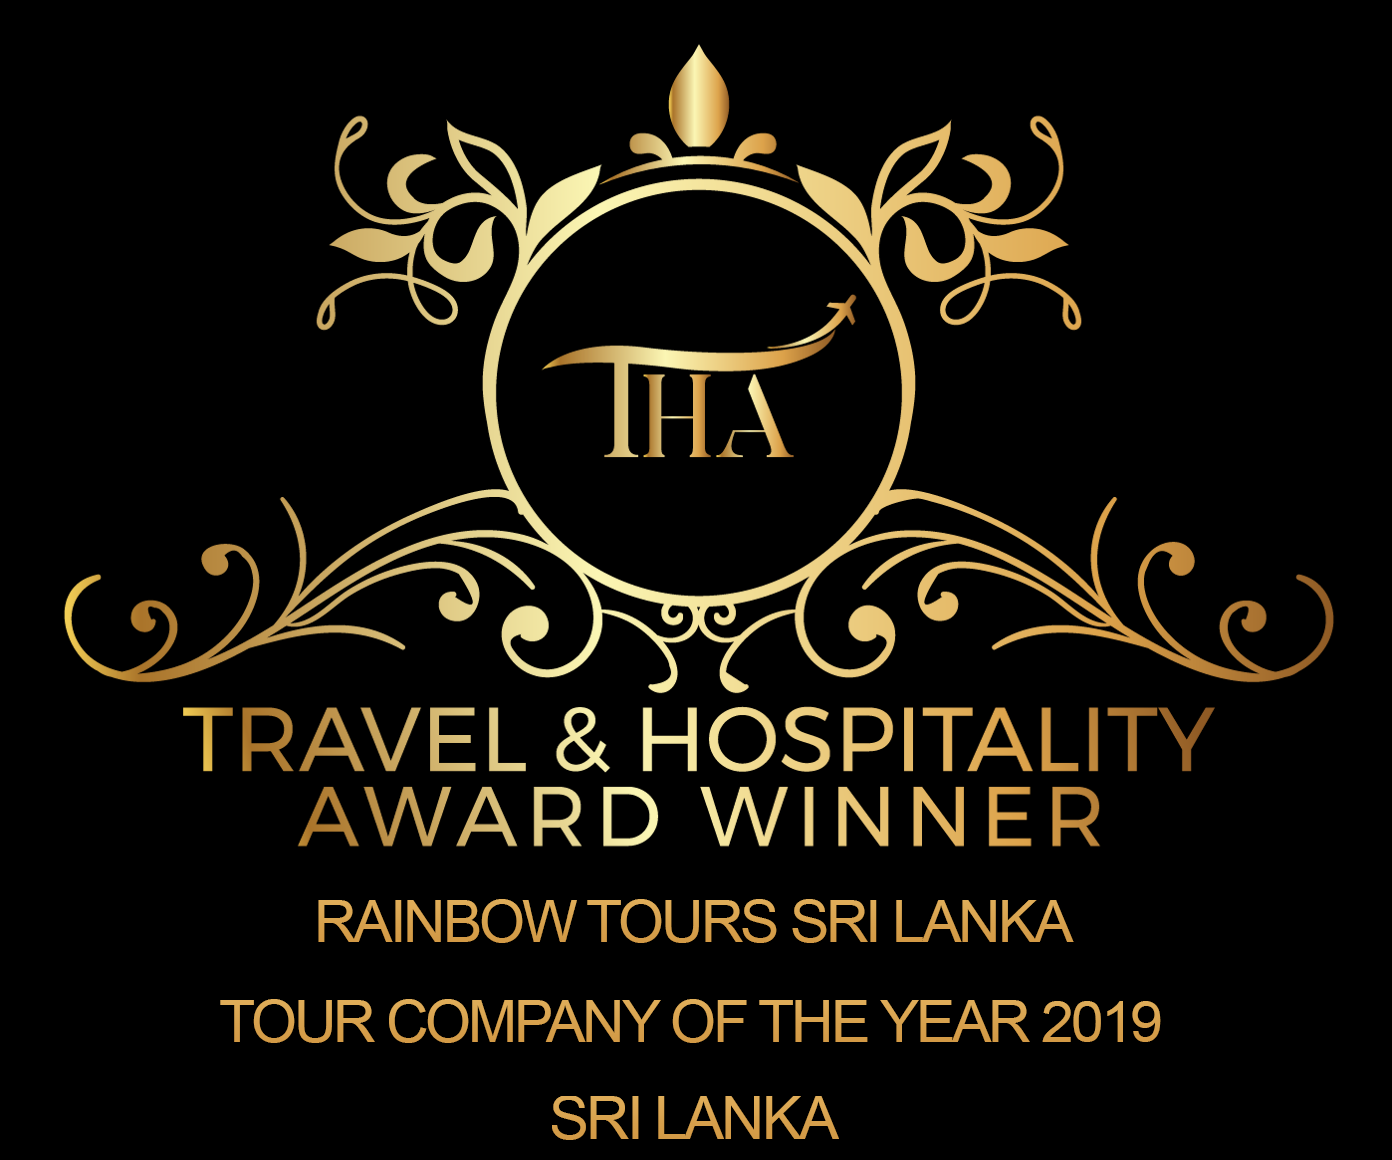 Tour Company of the Year - Award Winner 2019 in Sri Lanka.